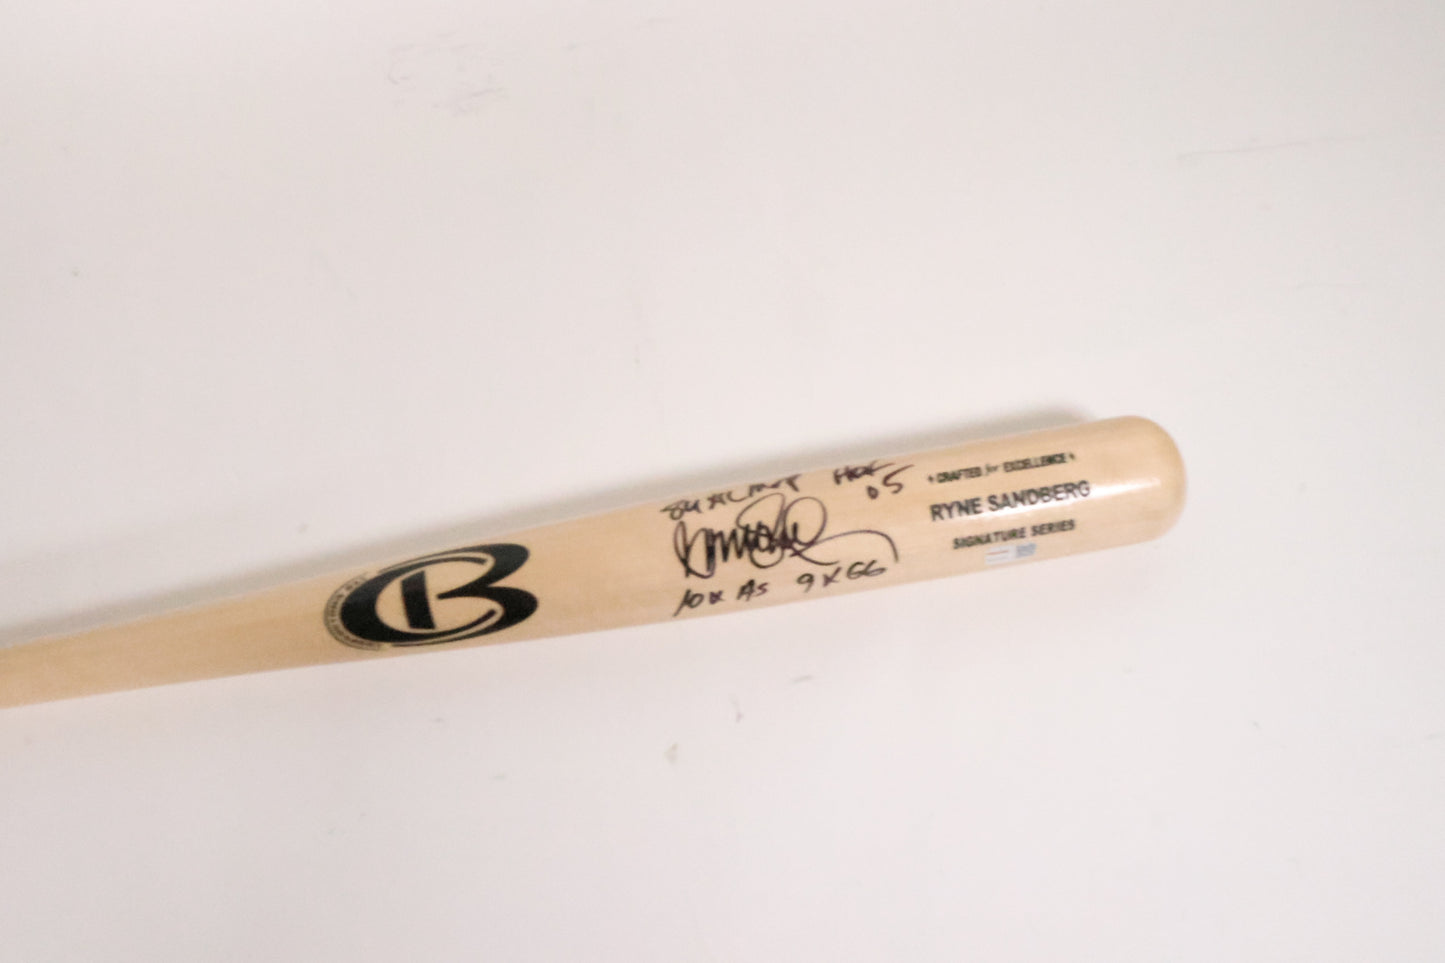 Ryne Sandberg Chicago Cubs Autographed Baseball Bat